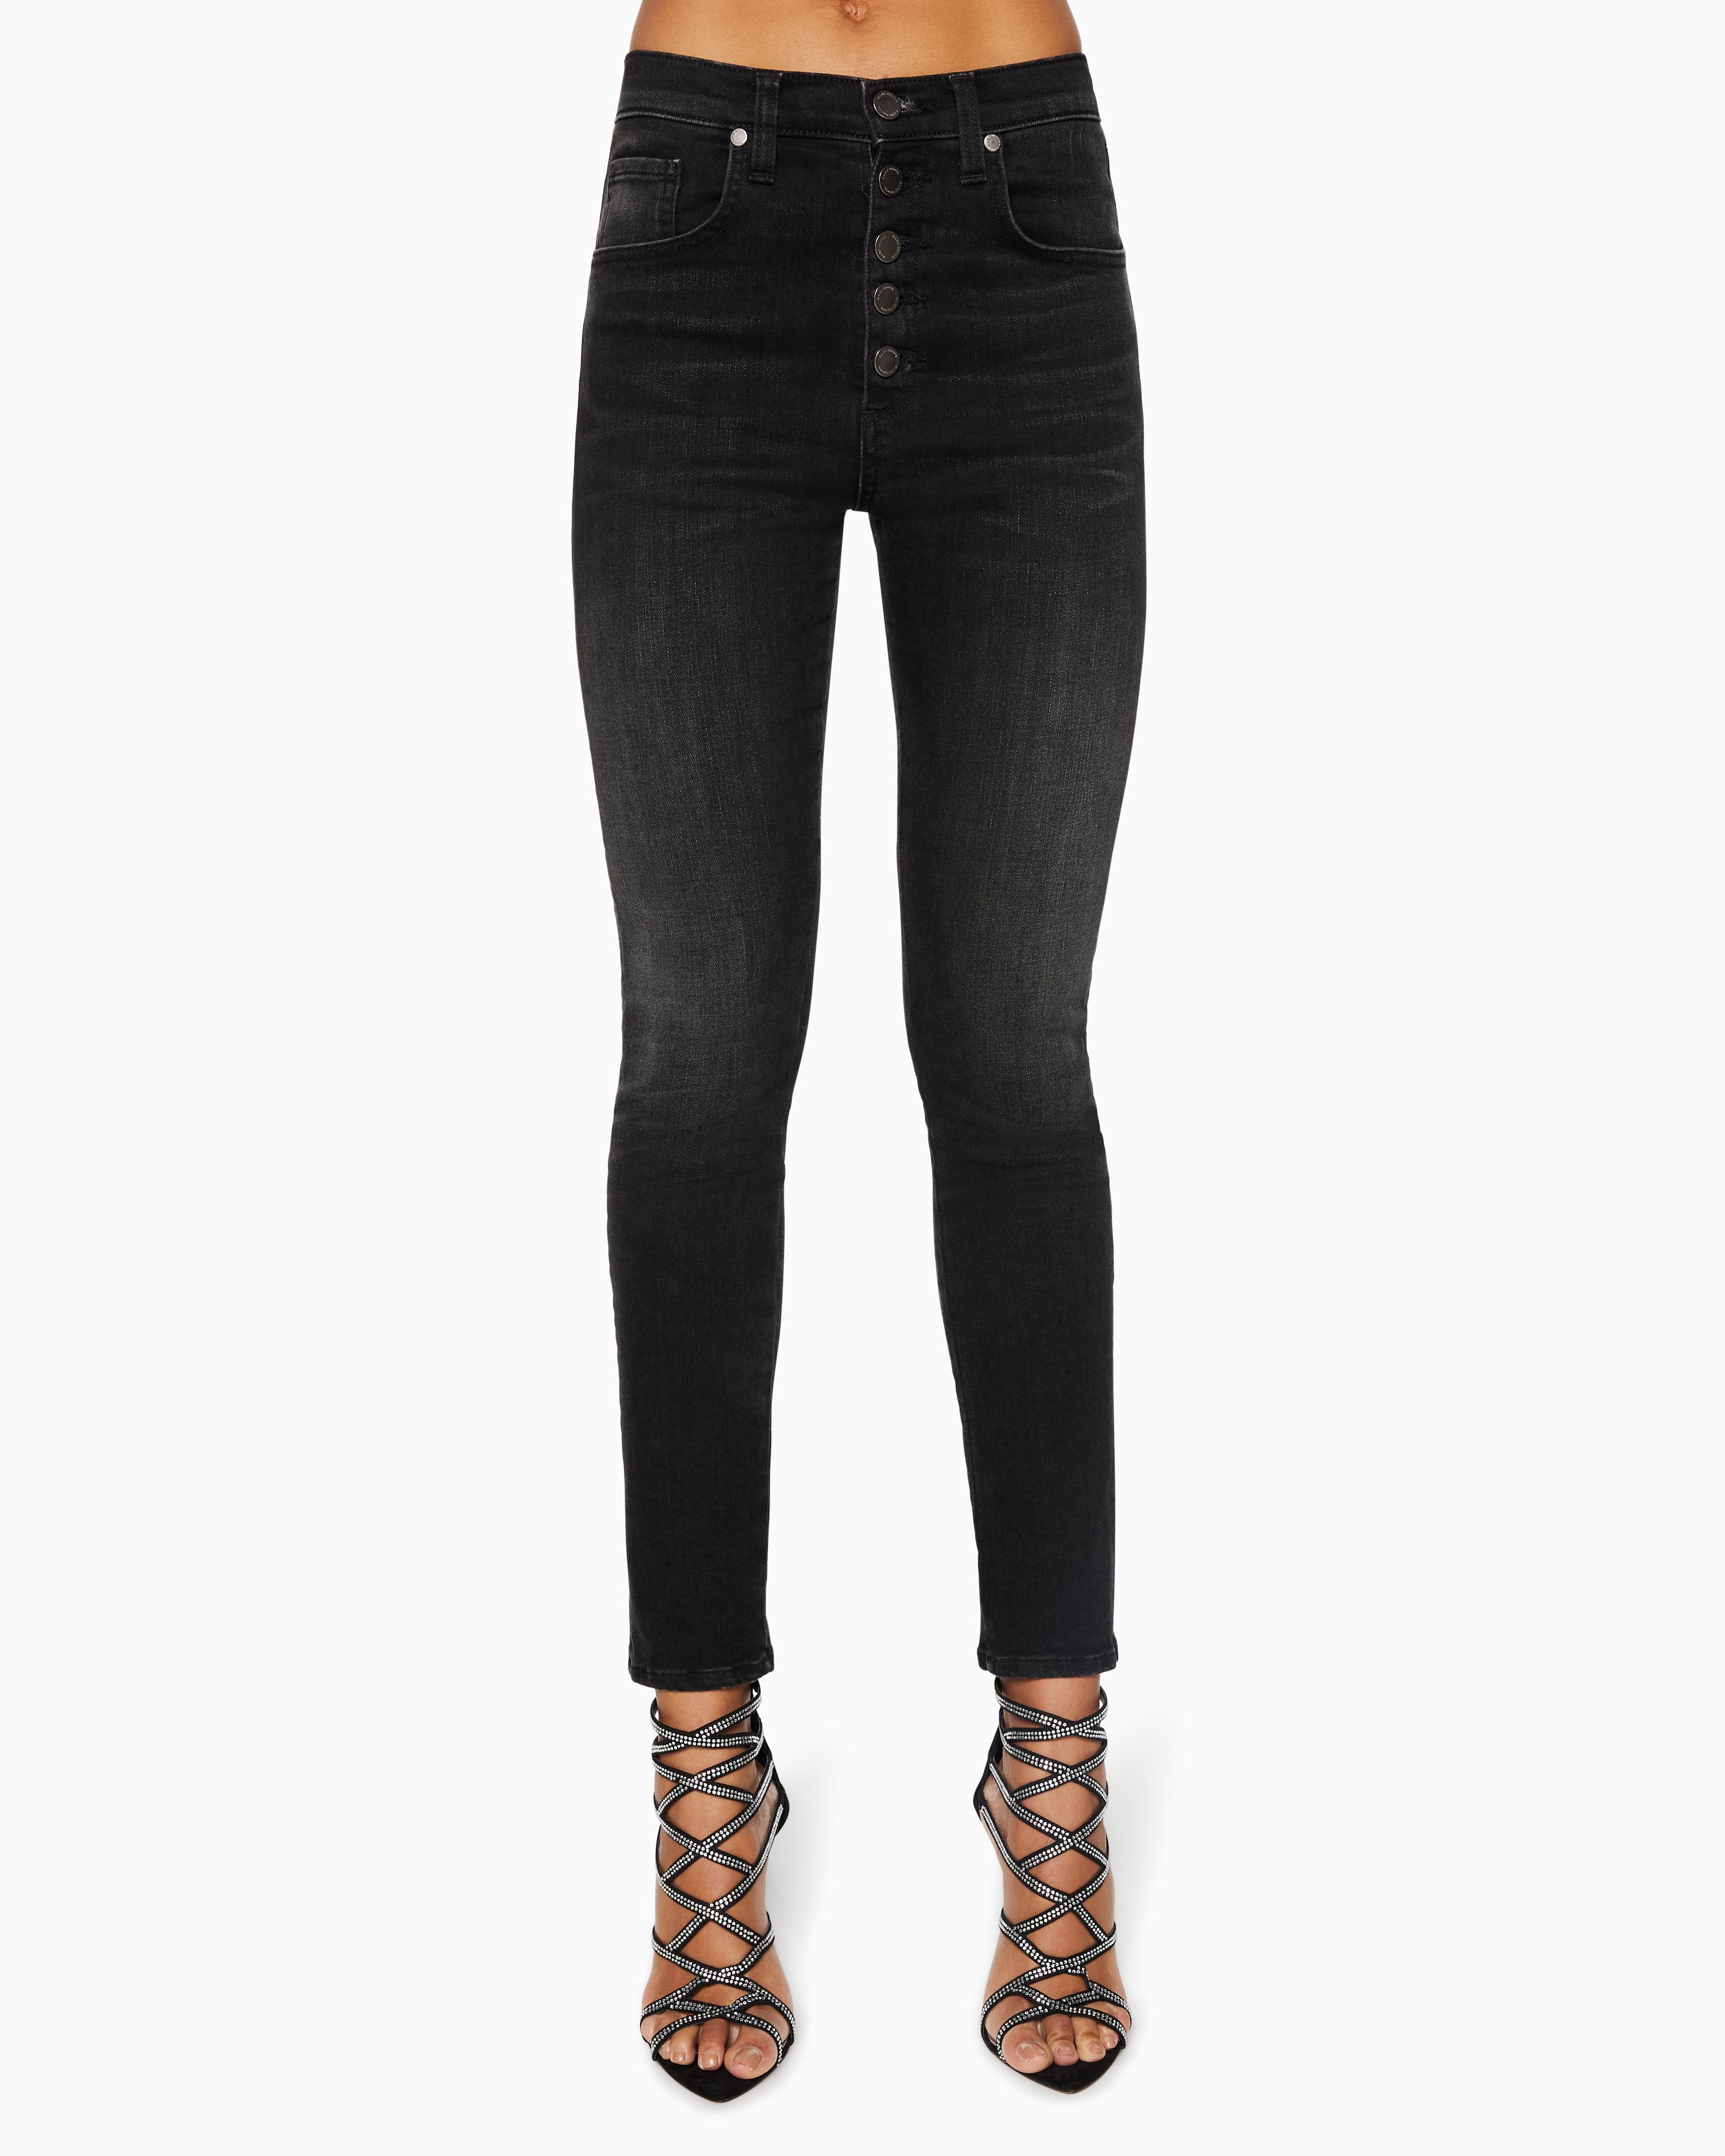  Karlie High-rise Skinny Jean in Black